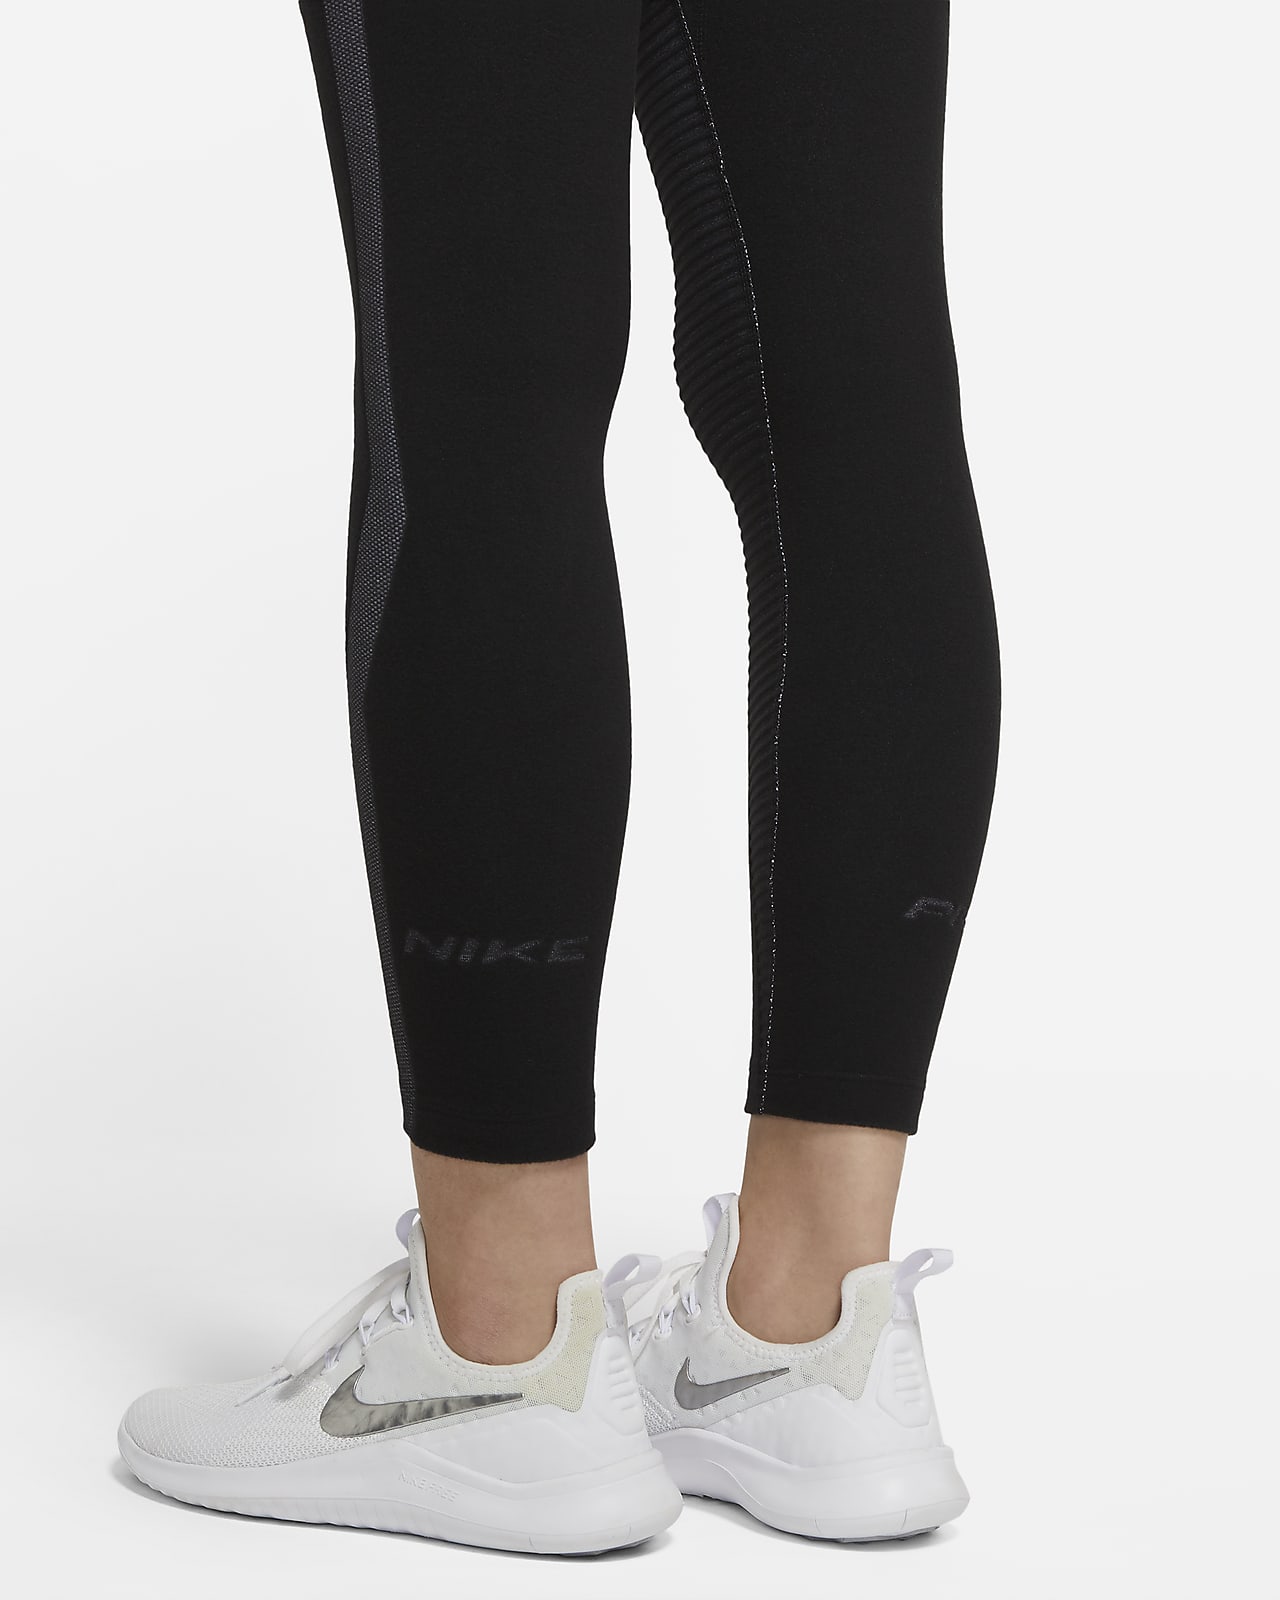 nike women's pro hyperwarm fleece printed athletic tights leggings